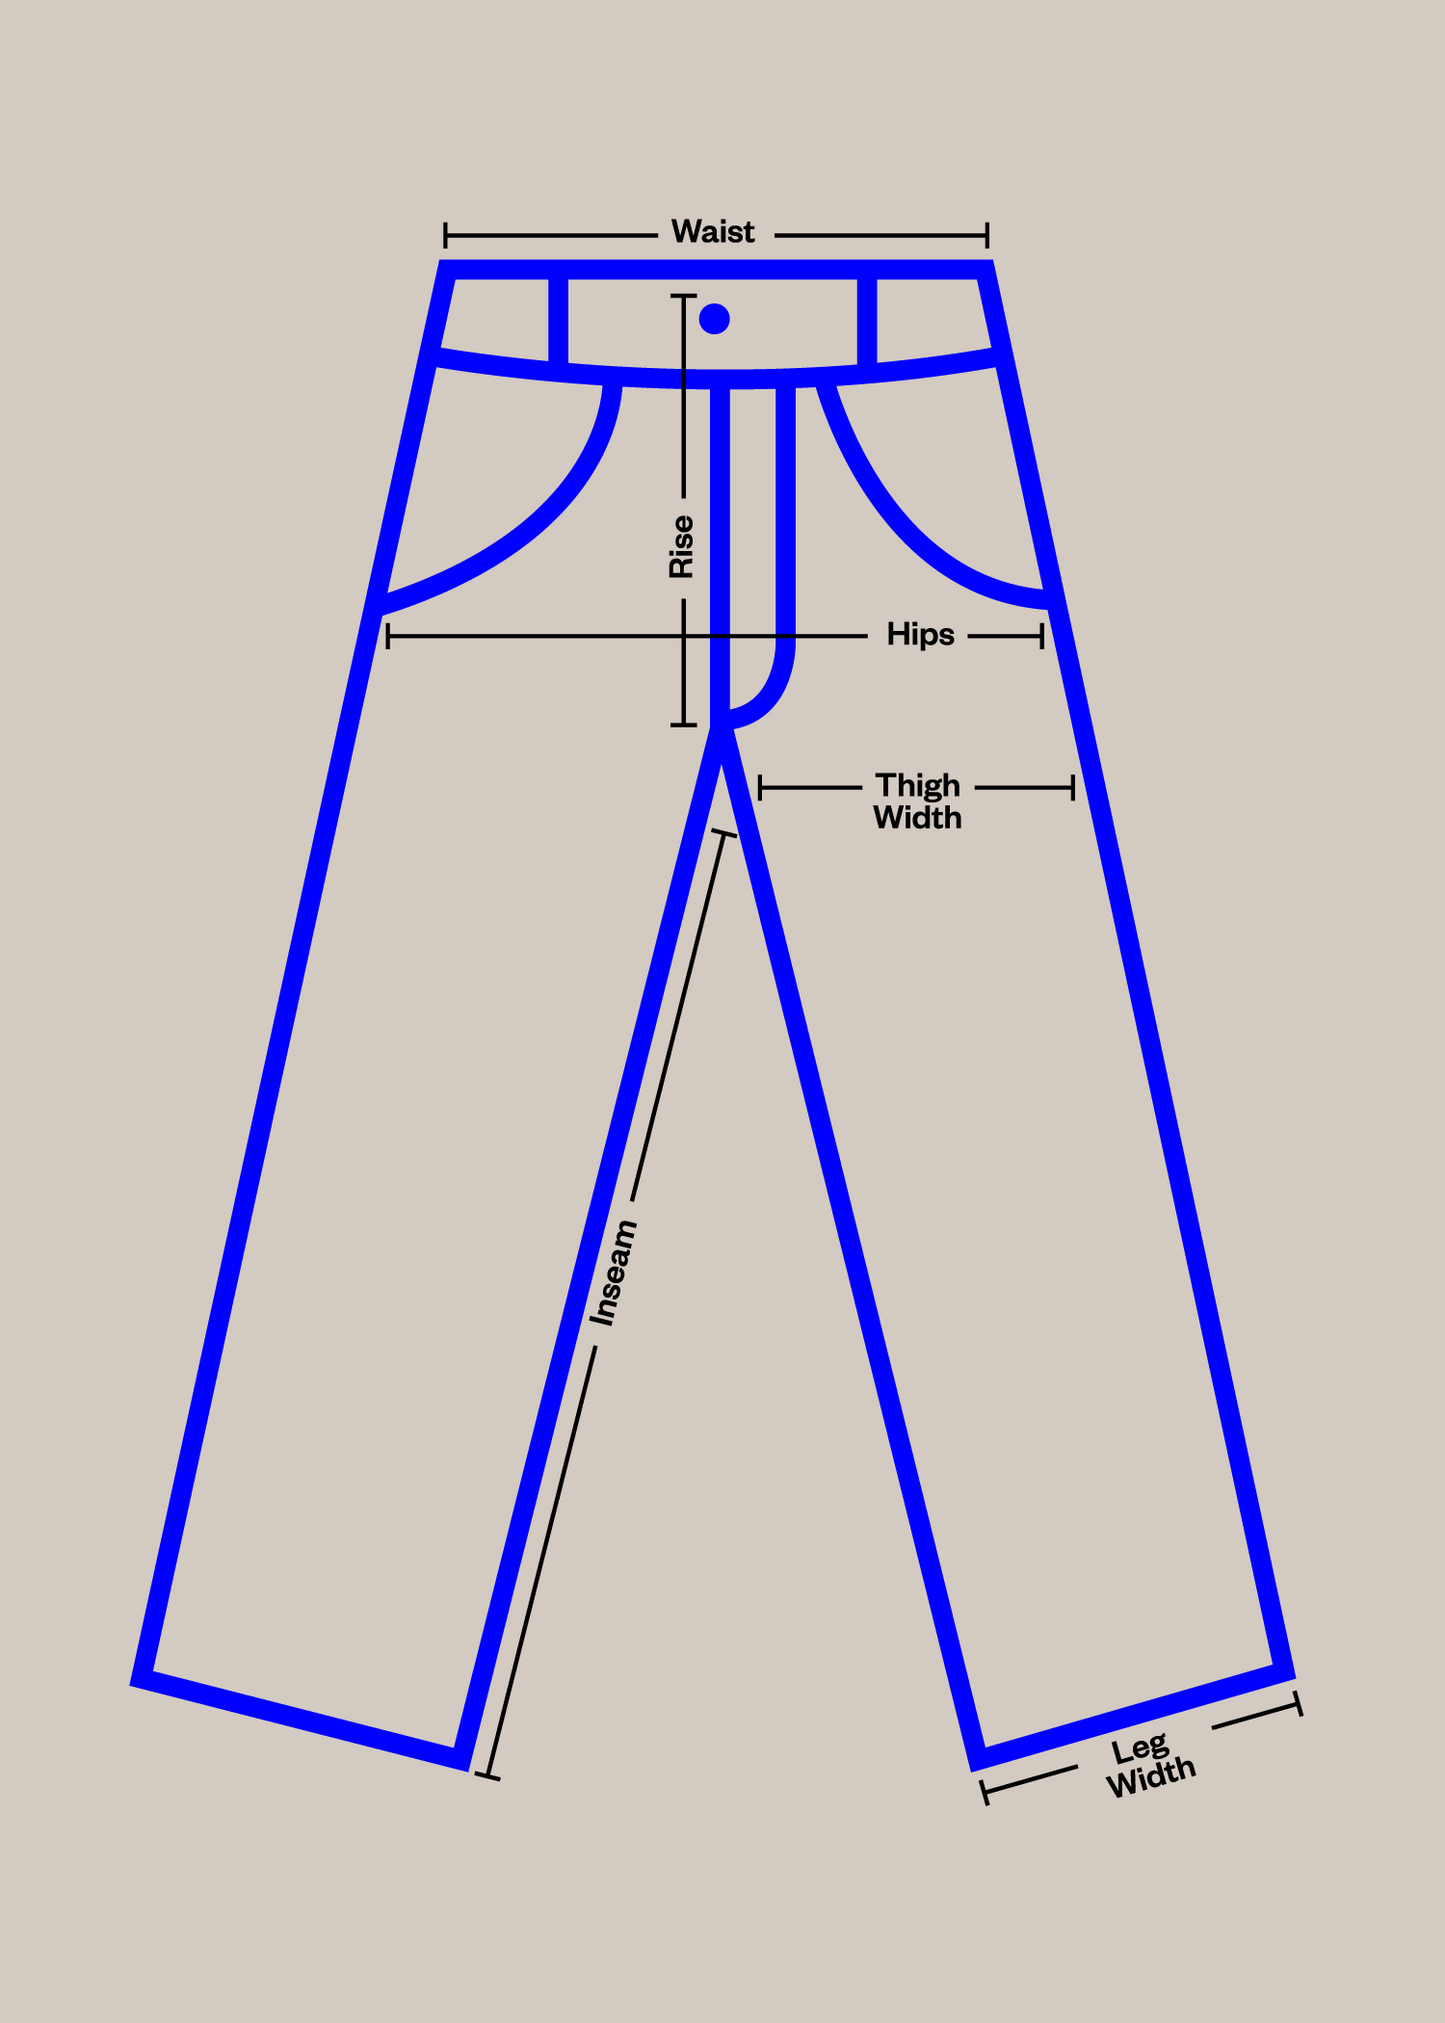 1990s Soffe USMC Drawstring Sweatpants Size S/M